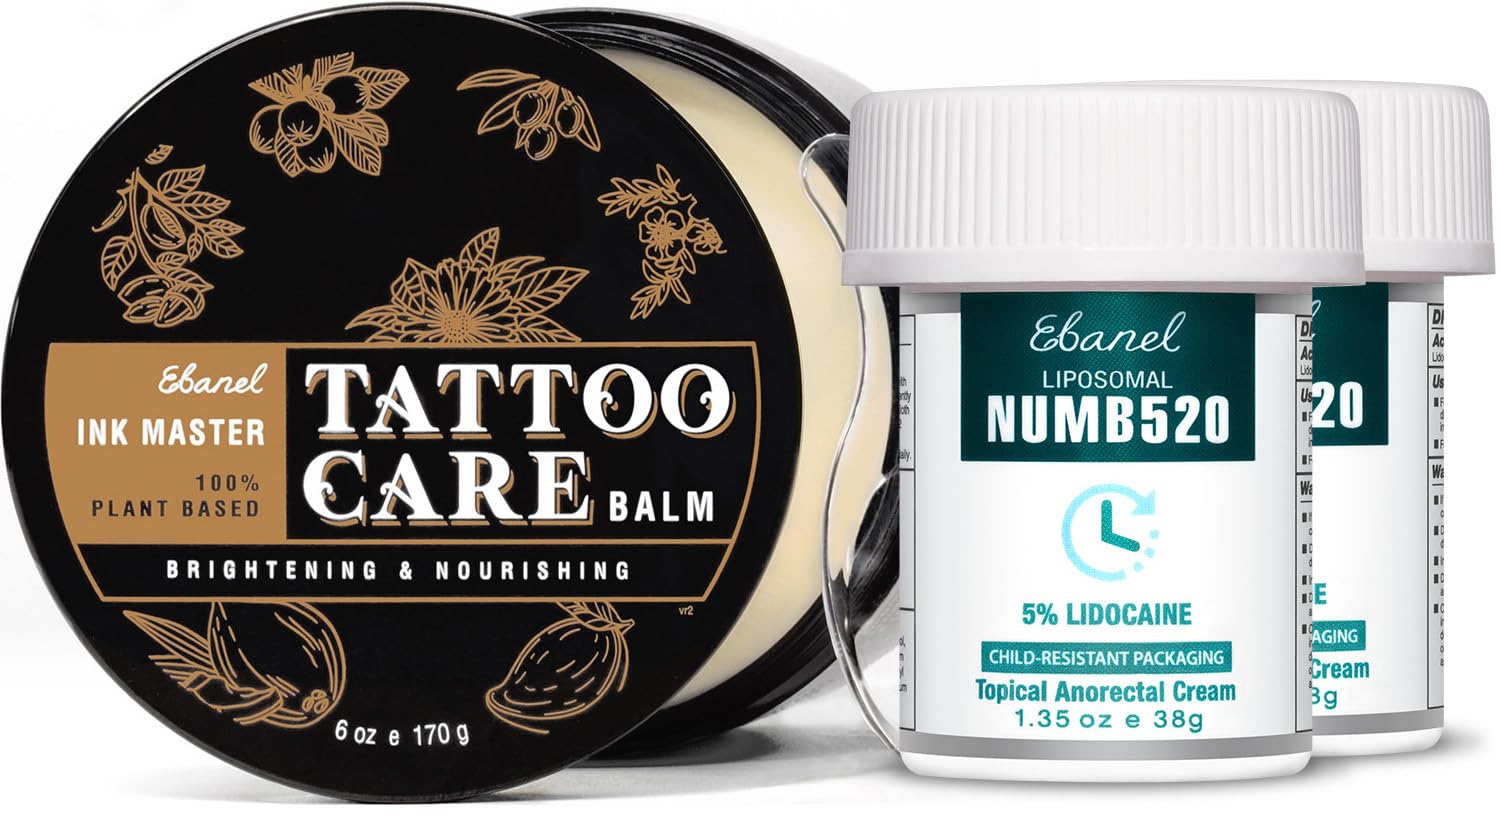 Ebanel Bundle of 5% Lidocaine Numbing Cream and Tattoo Aftercare Healing Balm